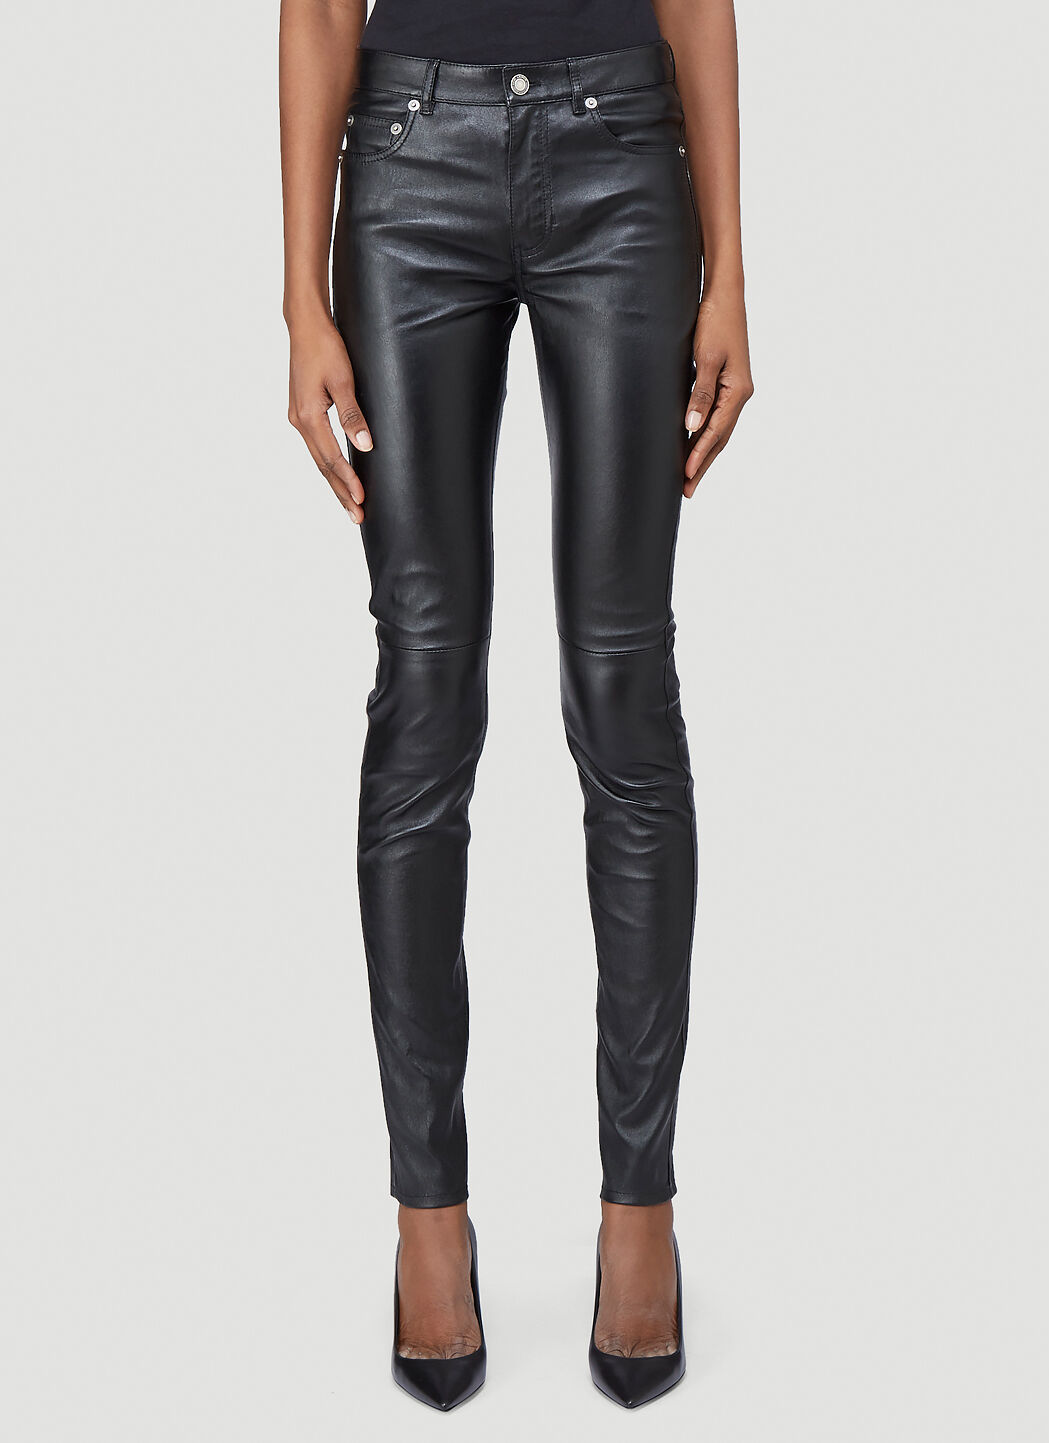 Women's Leather Pants | Mona Black Skinny Pants | KC Leather Co.